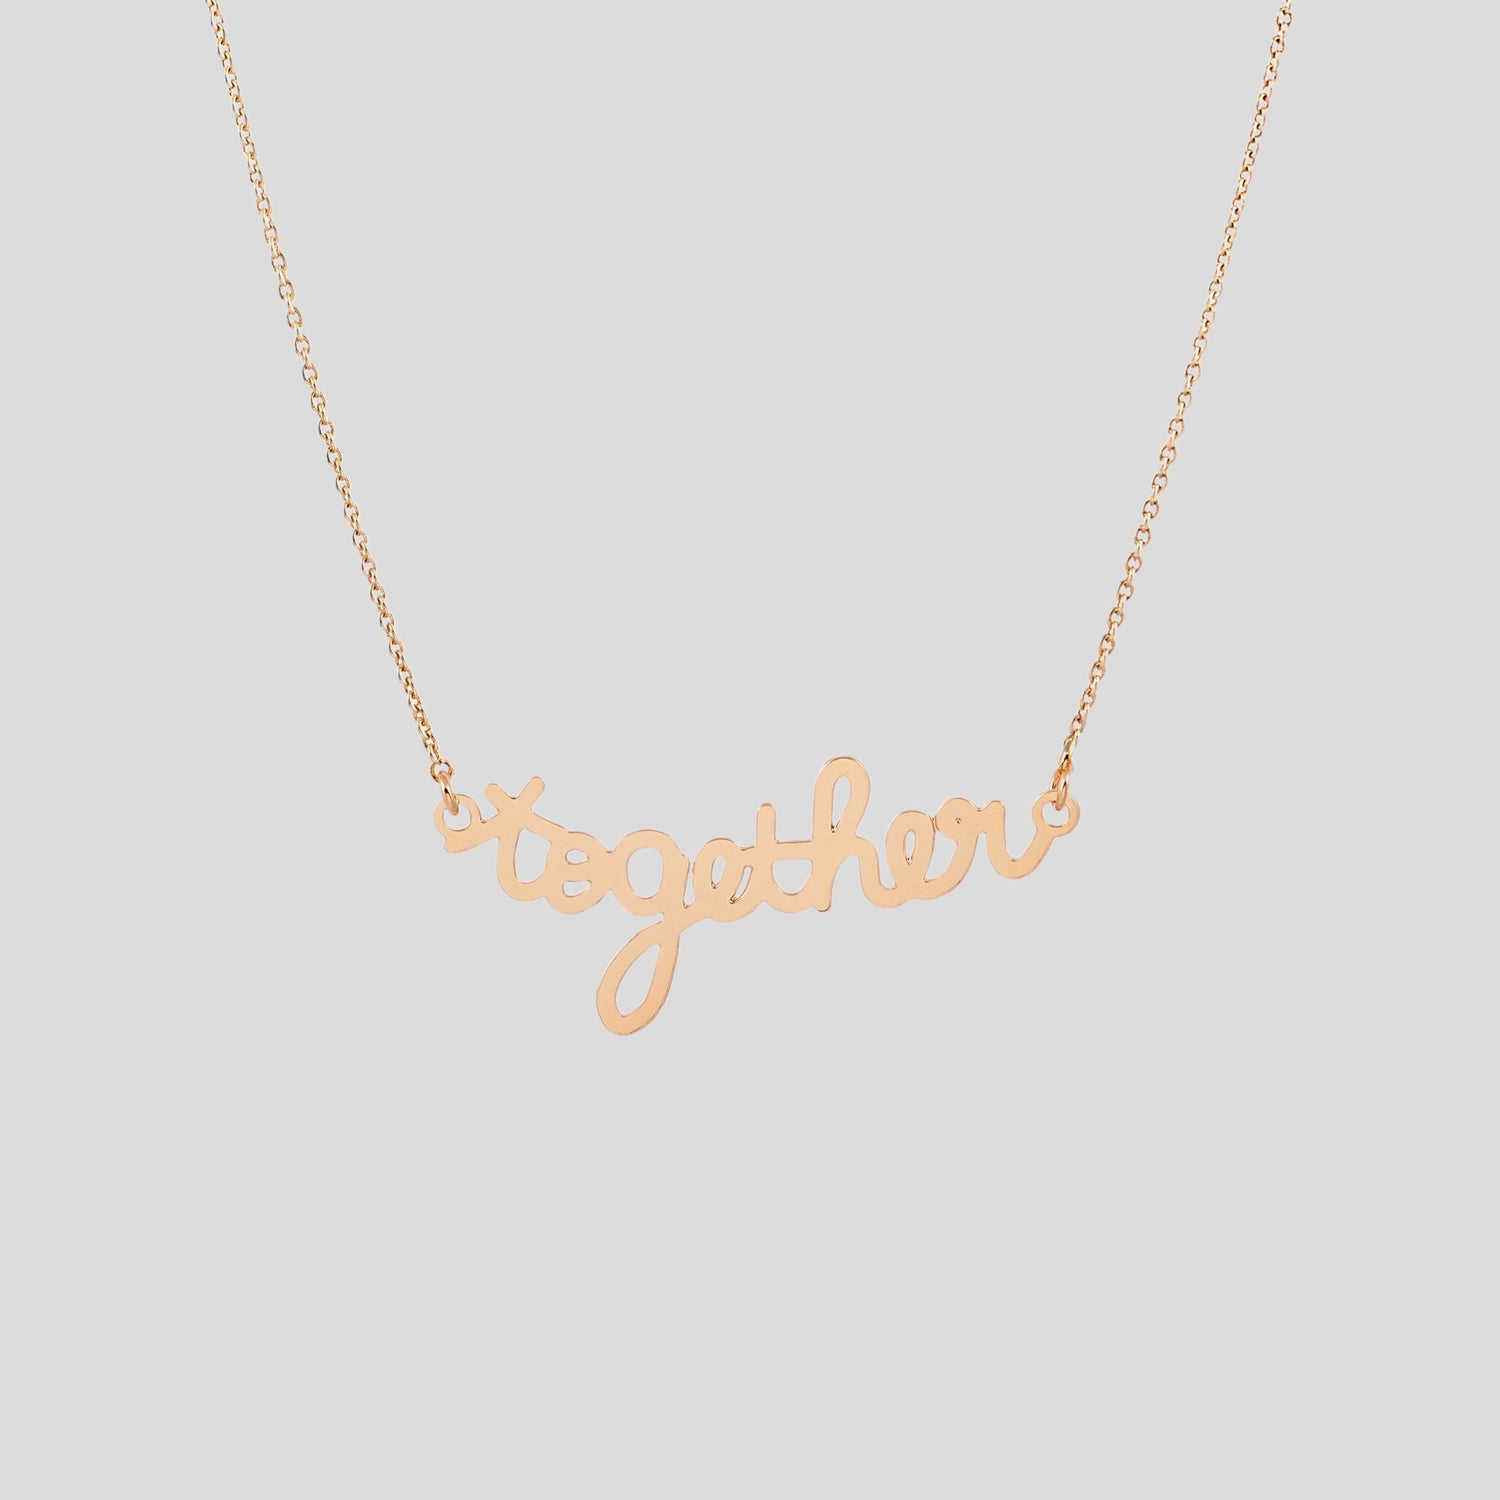 Together necklace